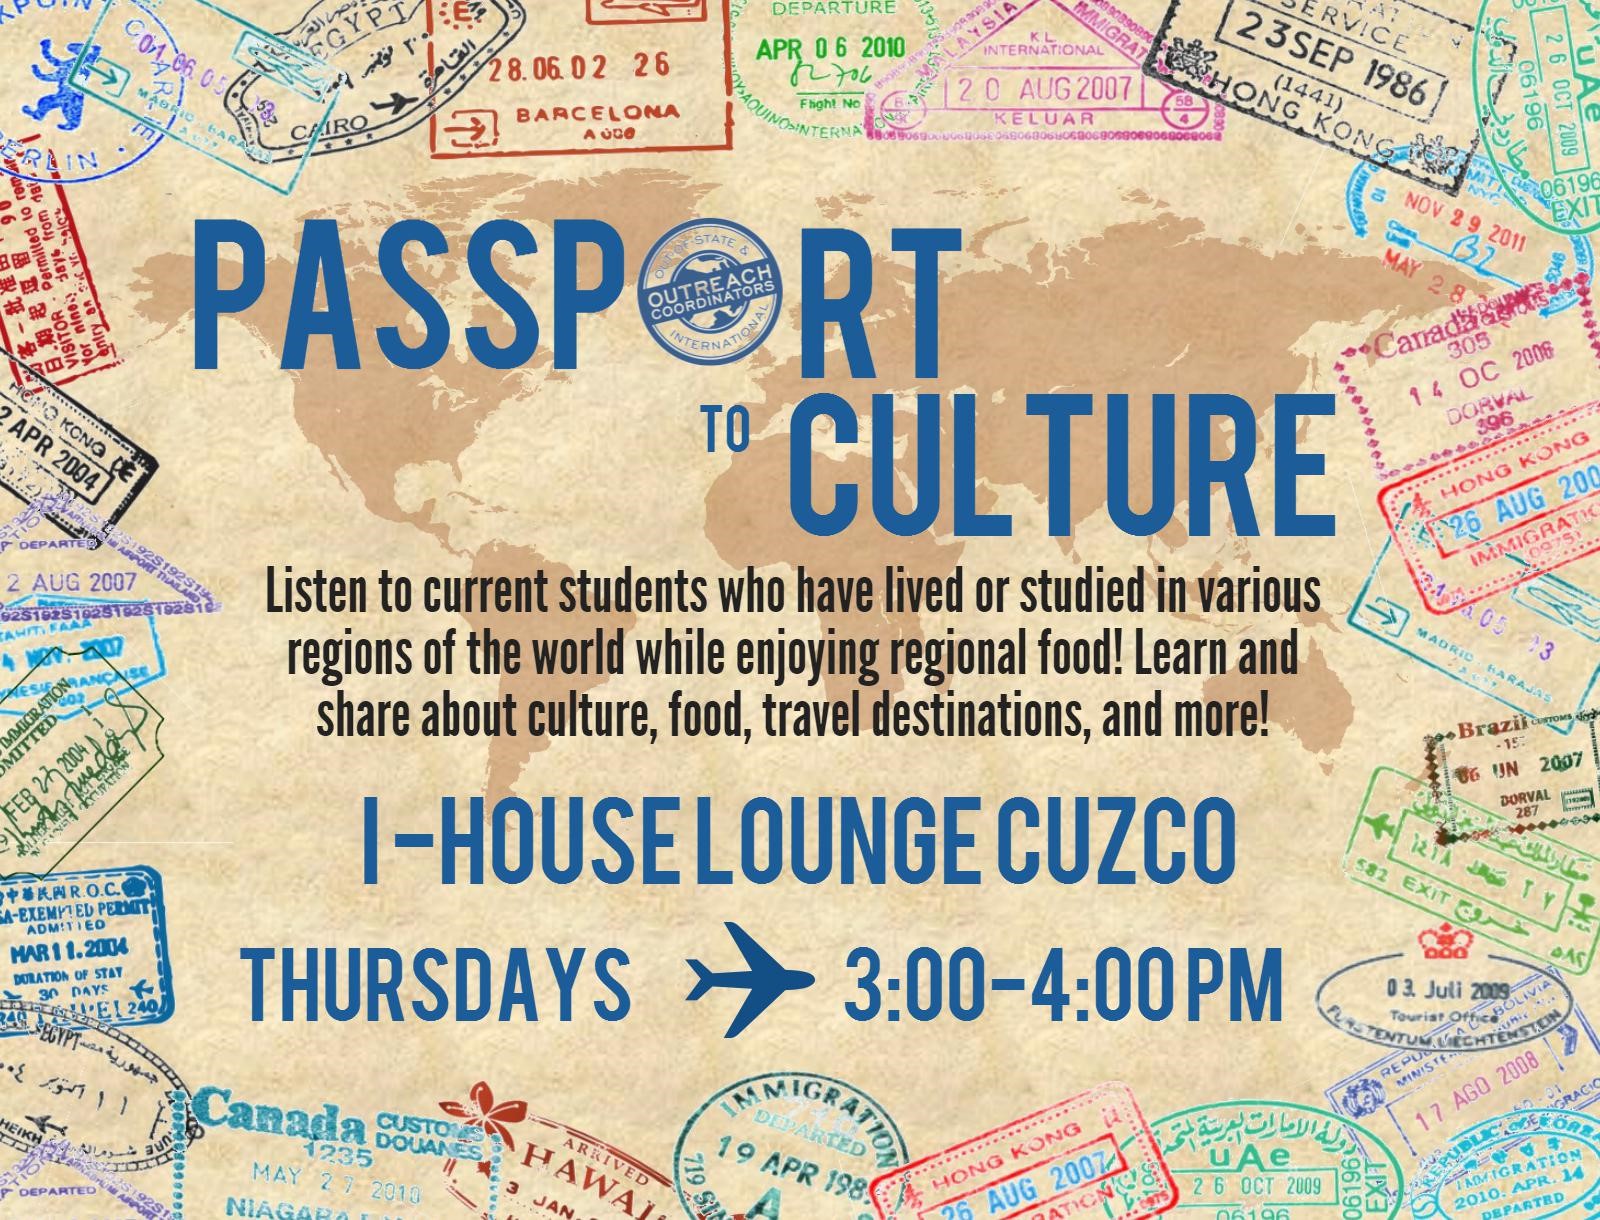 Passport to Culture